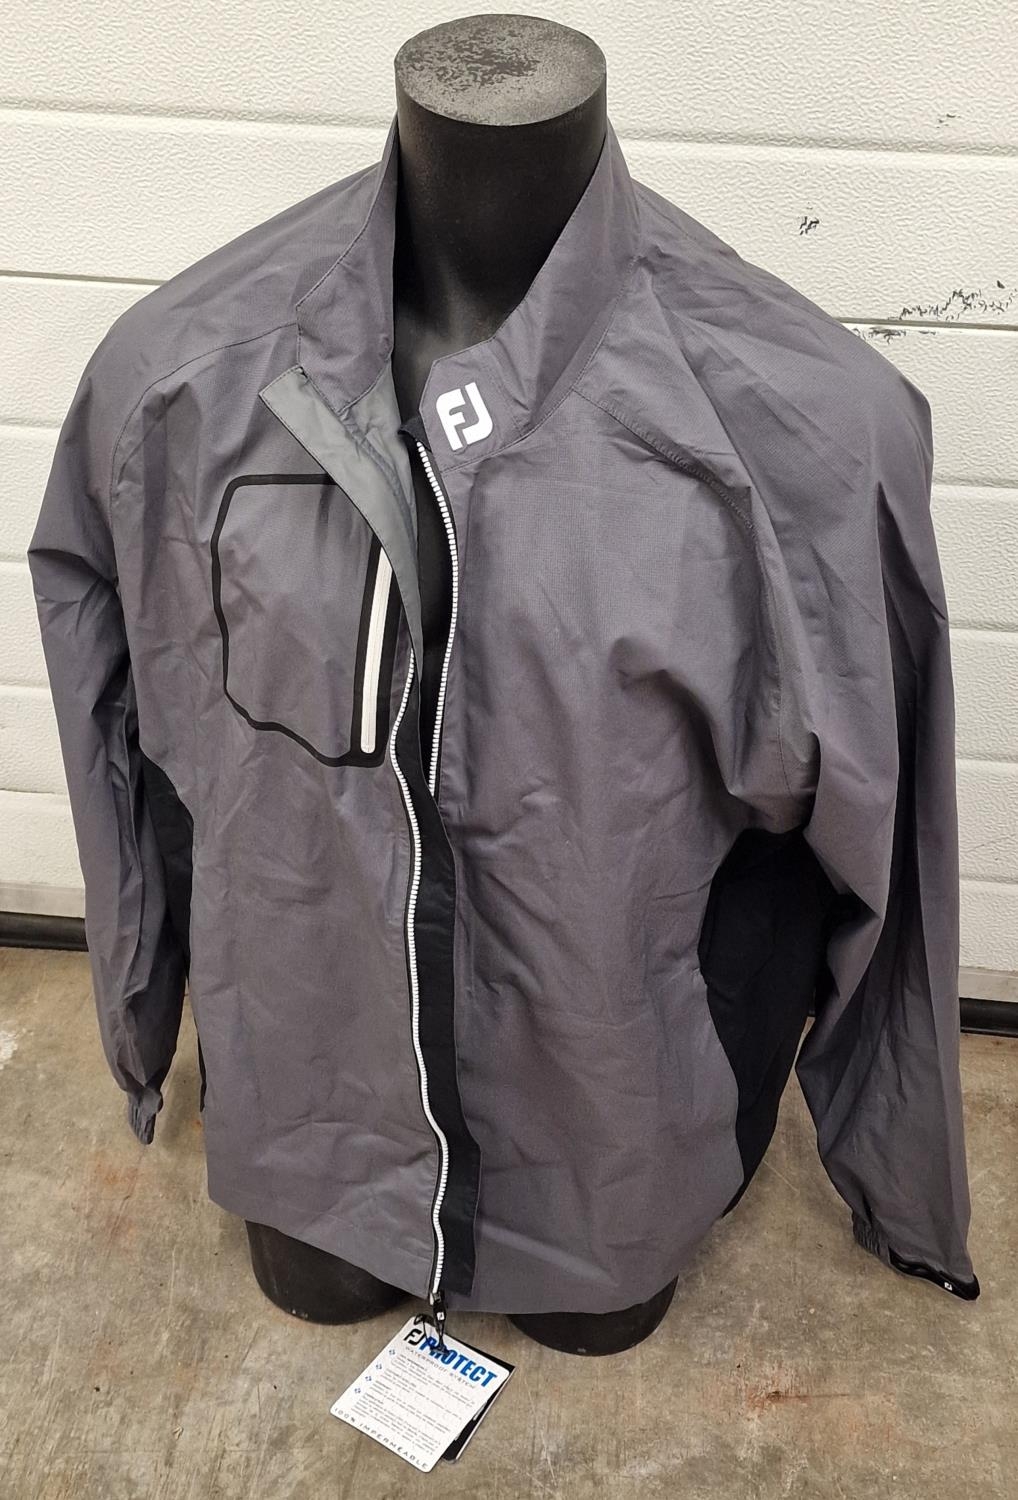 A men’s grey Hydrolite jacket size 2xl (15)